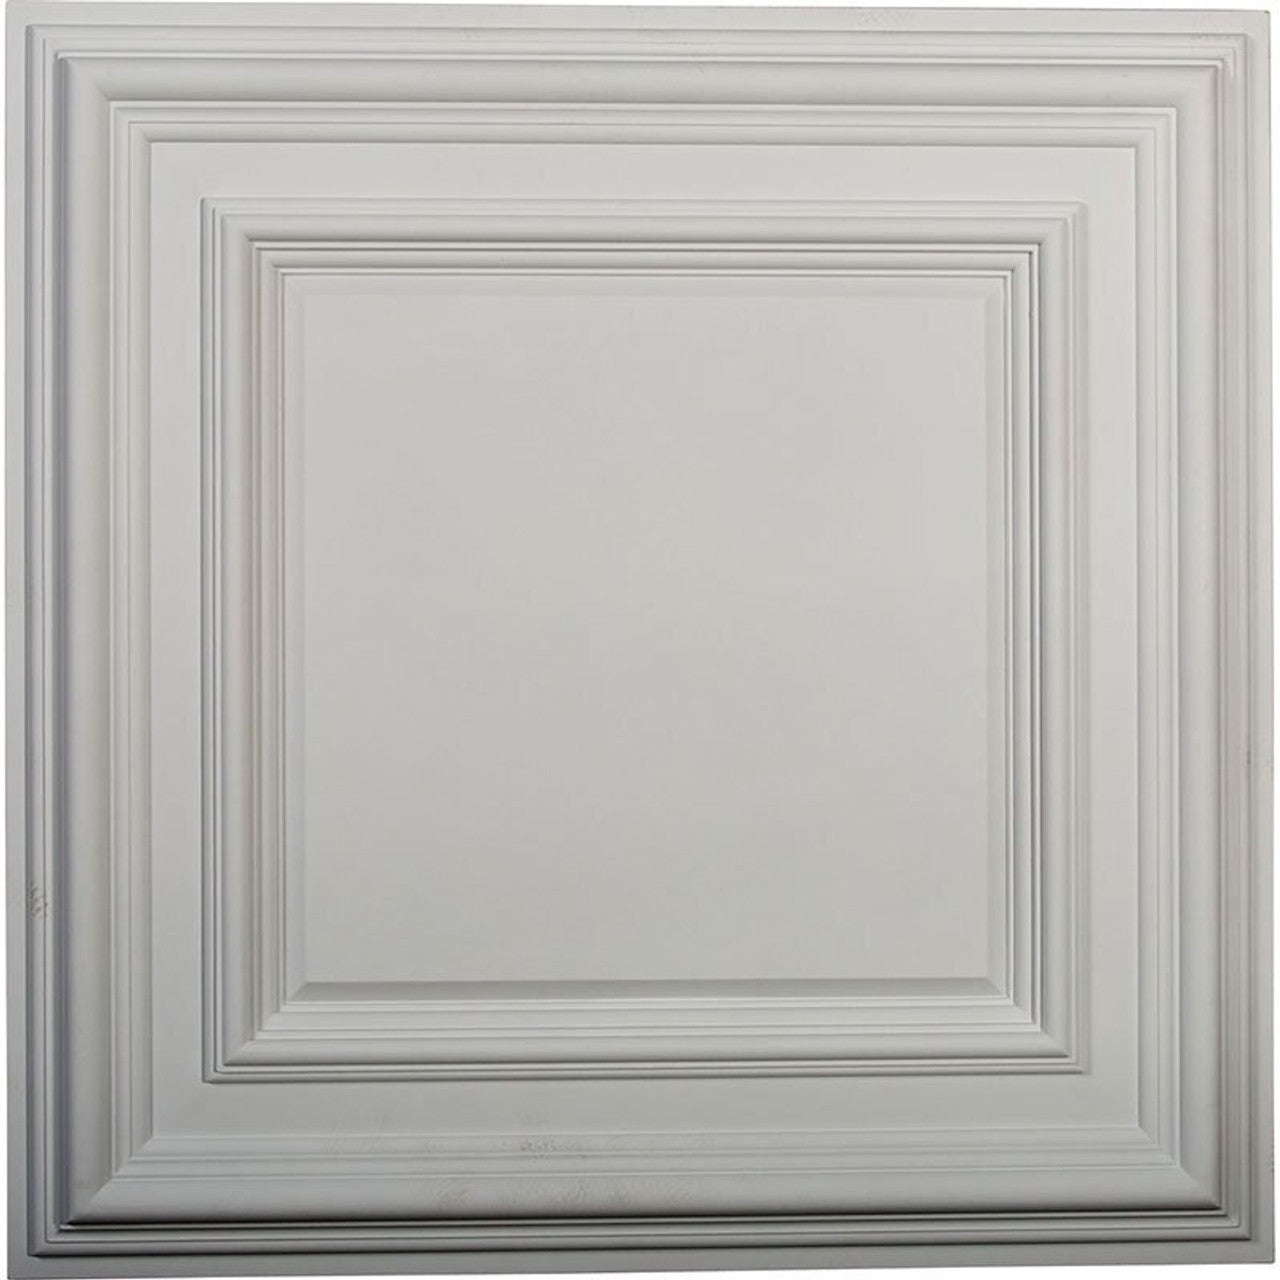 Classic Square - Urethane Ceiling Tile - 24"x24"